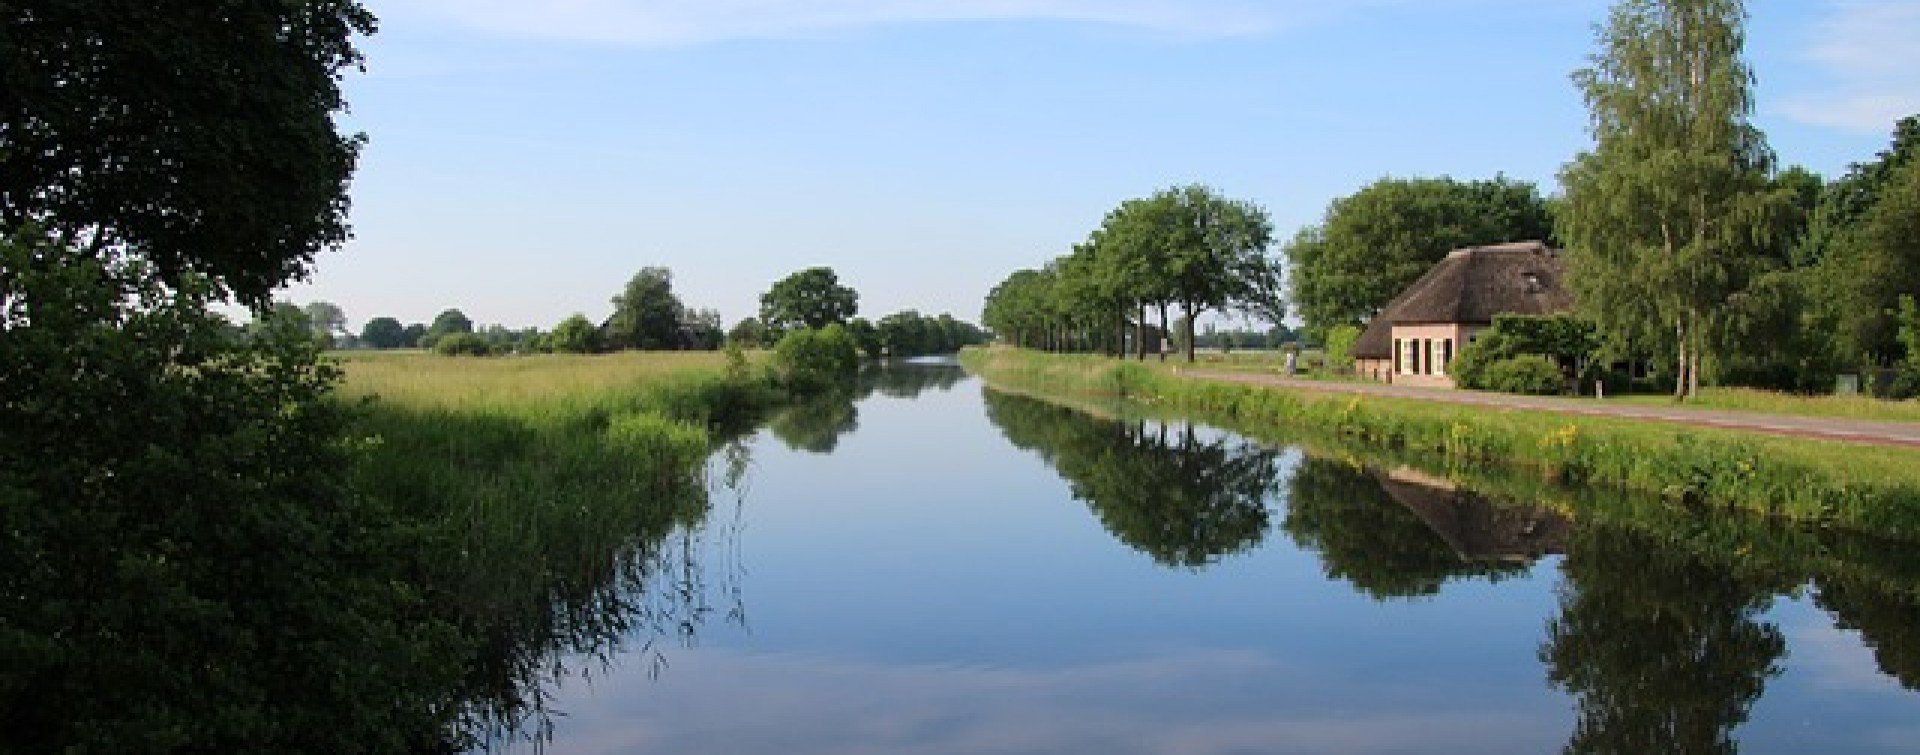 Rl-omgeving-gelderland